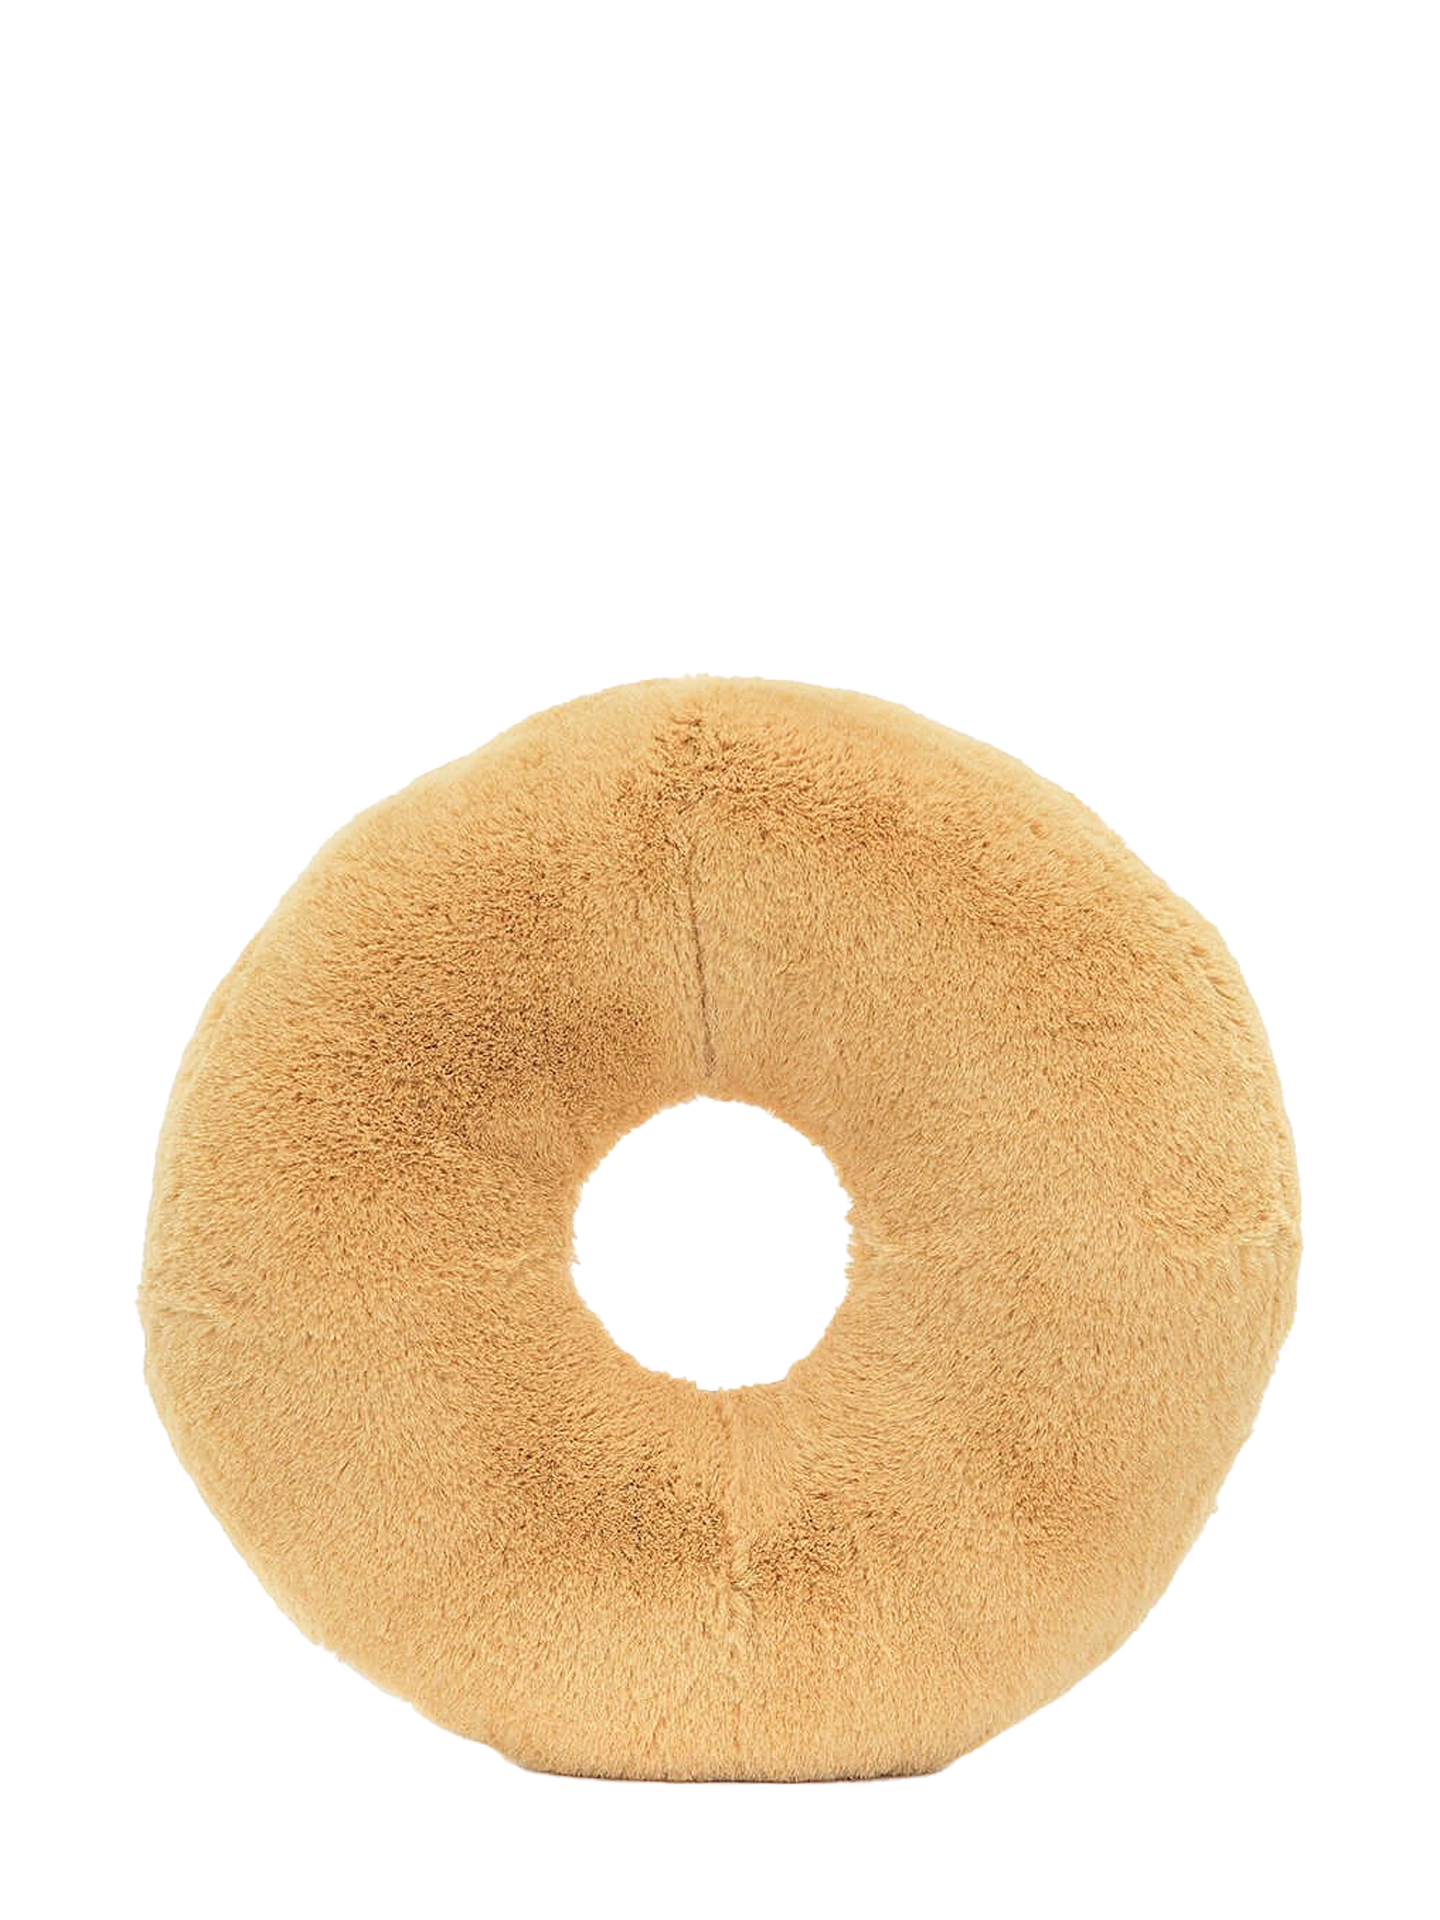 Amuseable Doughnut (18 cm)